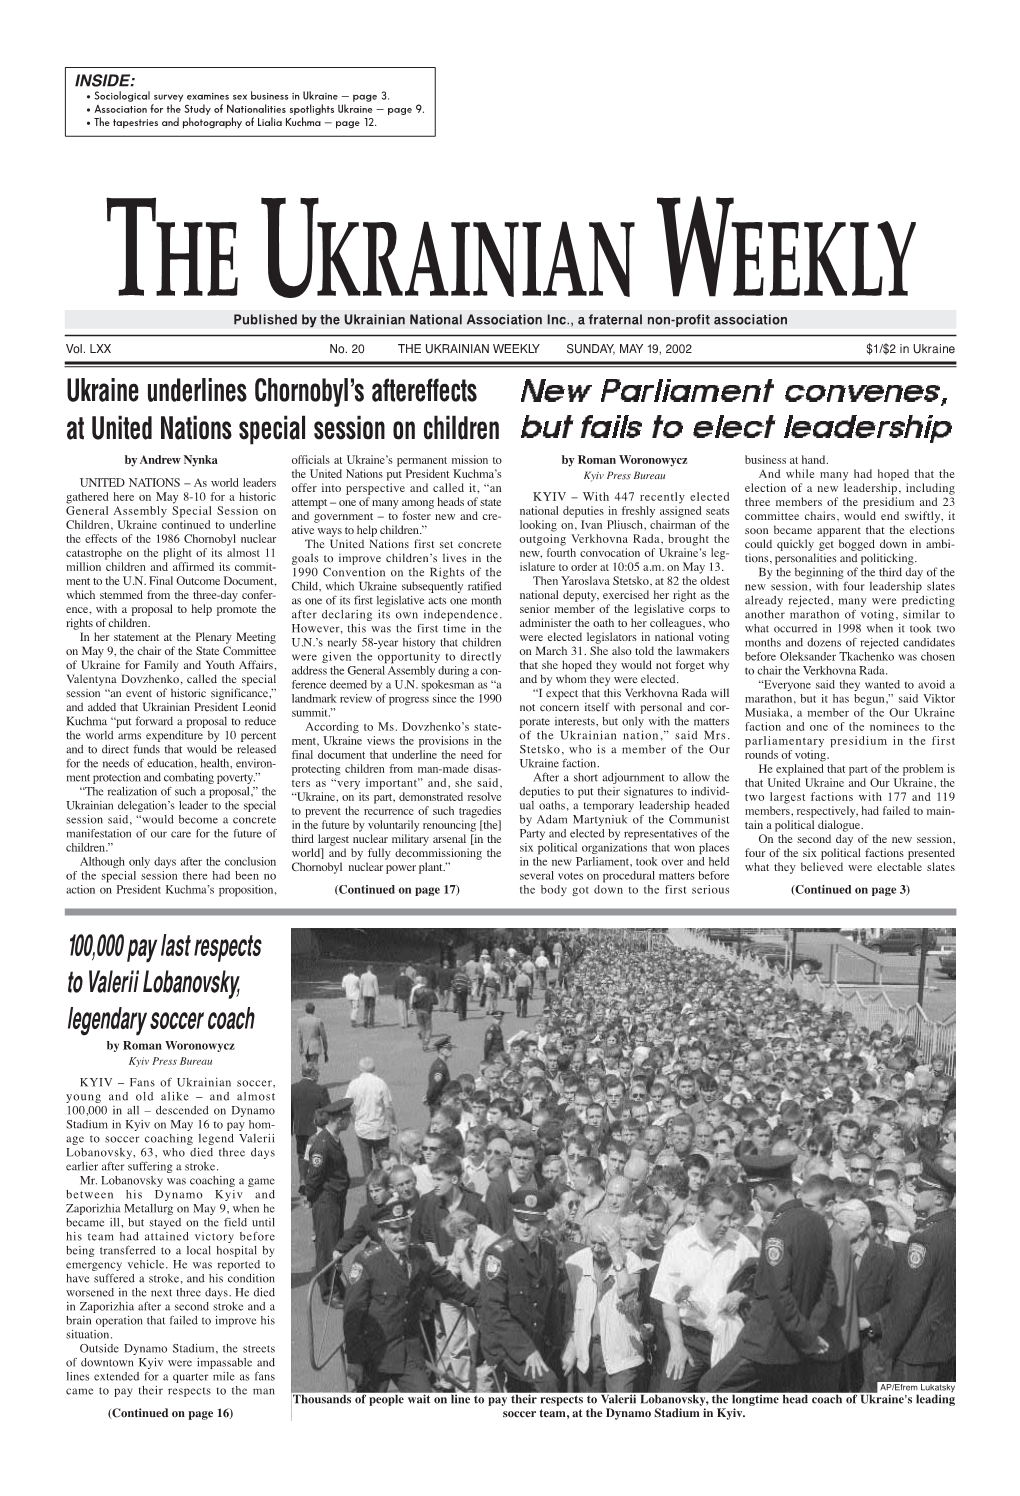 The Ukrainian Weekly 2002, No.20